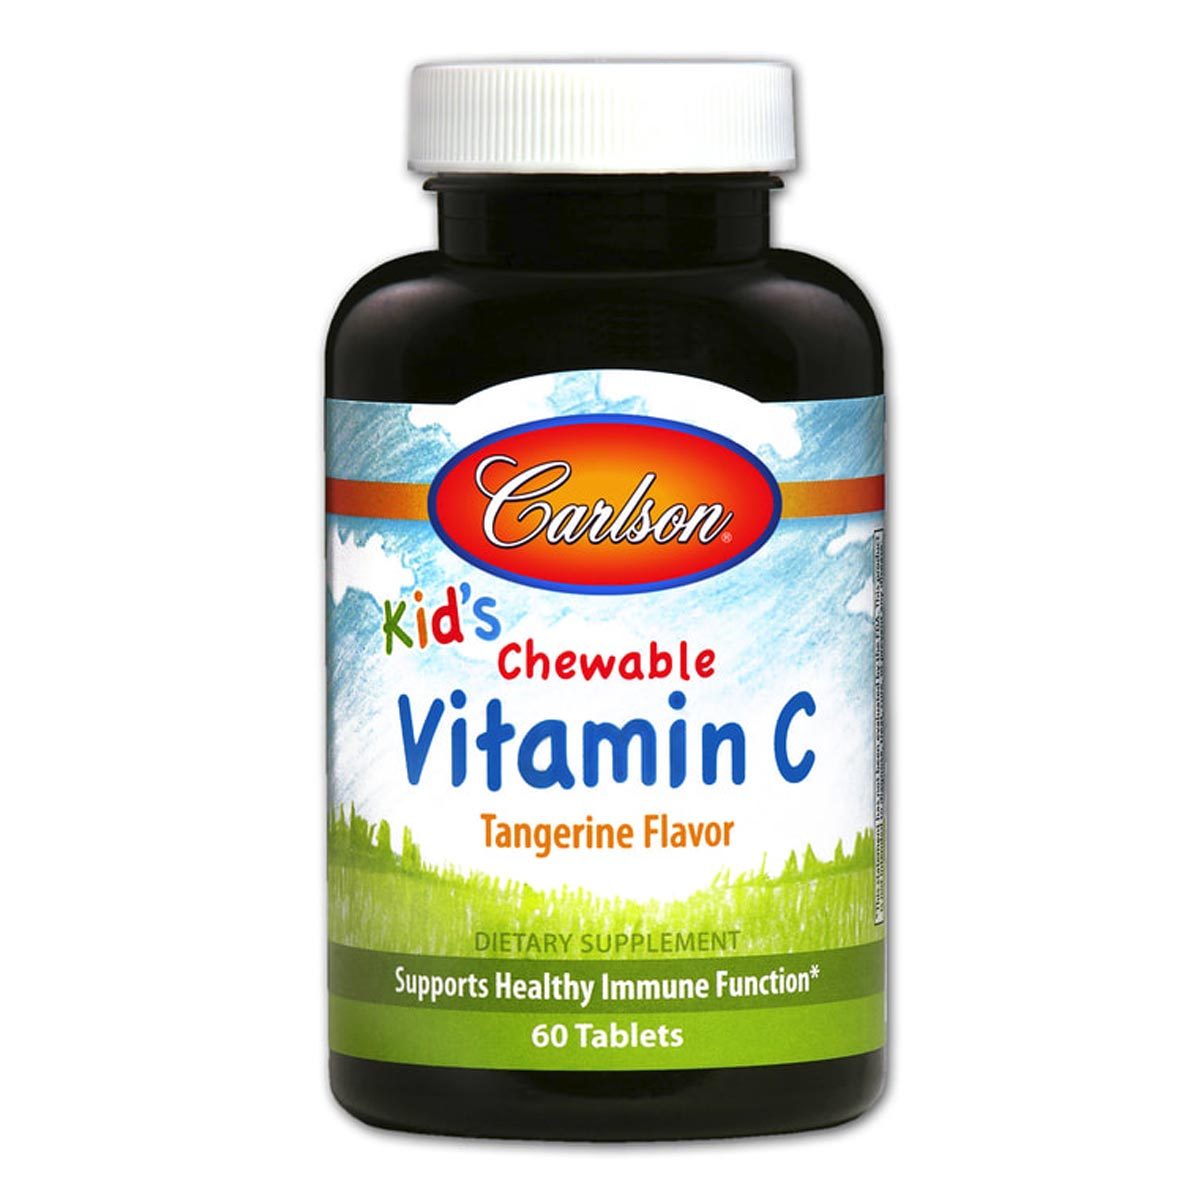 Primary image of Kids Chewable Vitamin C